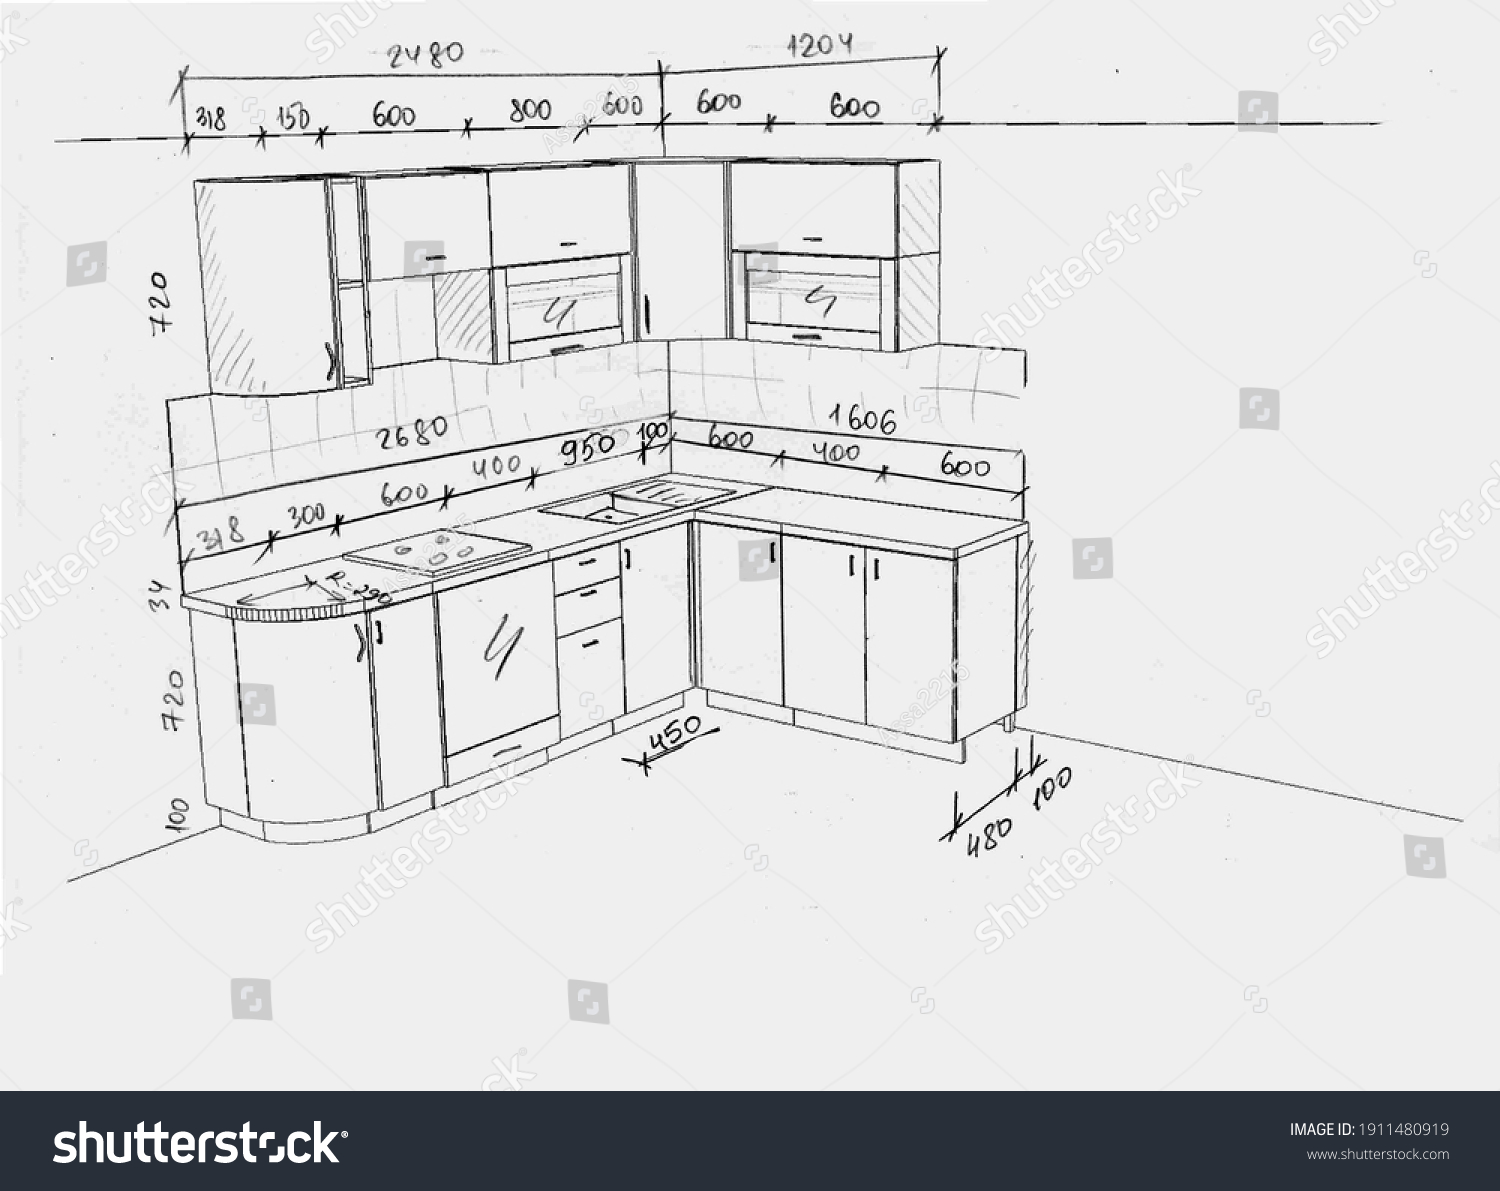 кухня высота фартука от пола